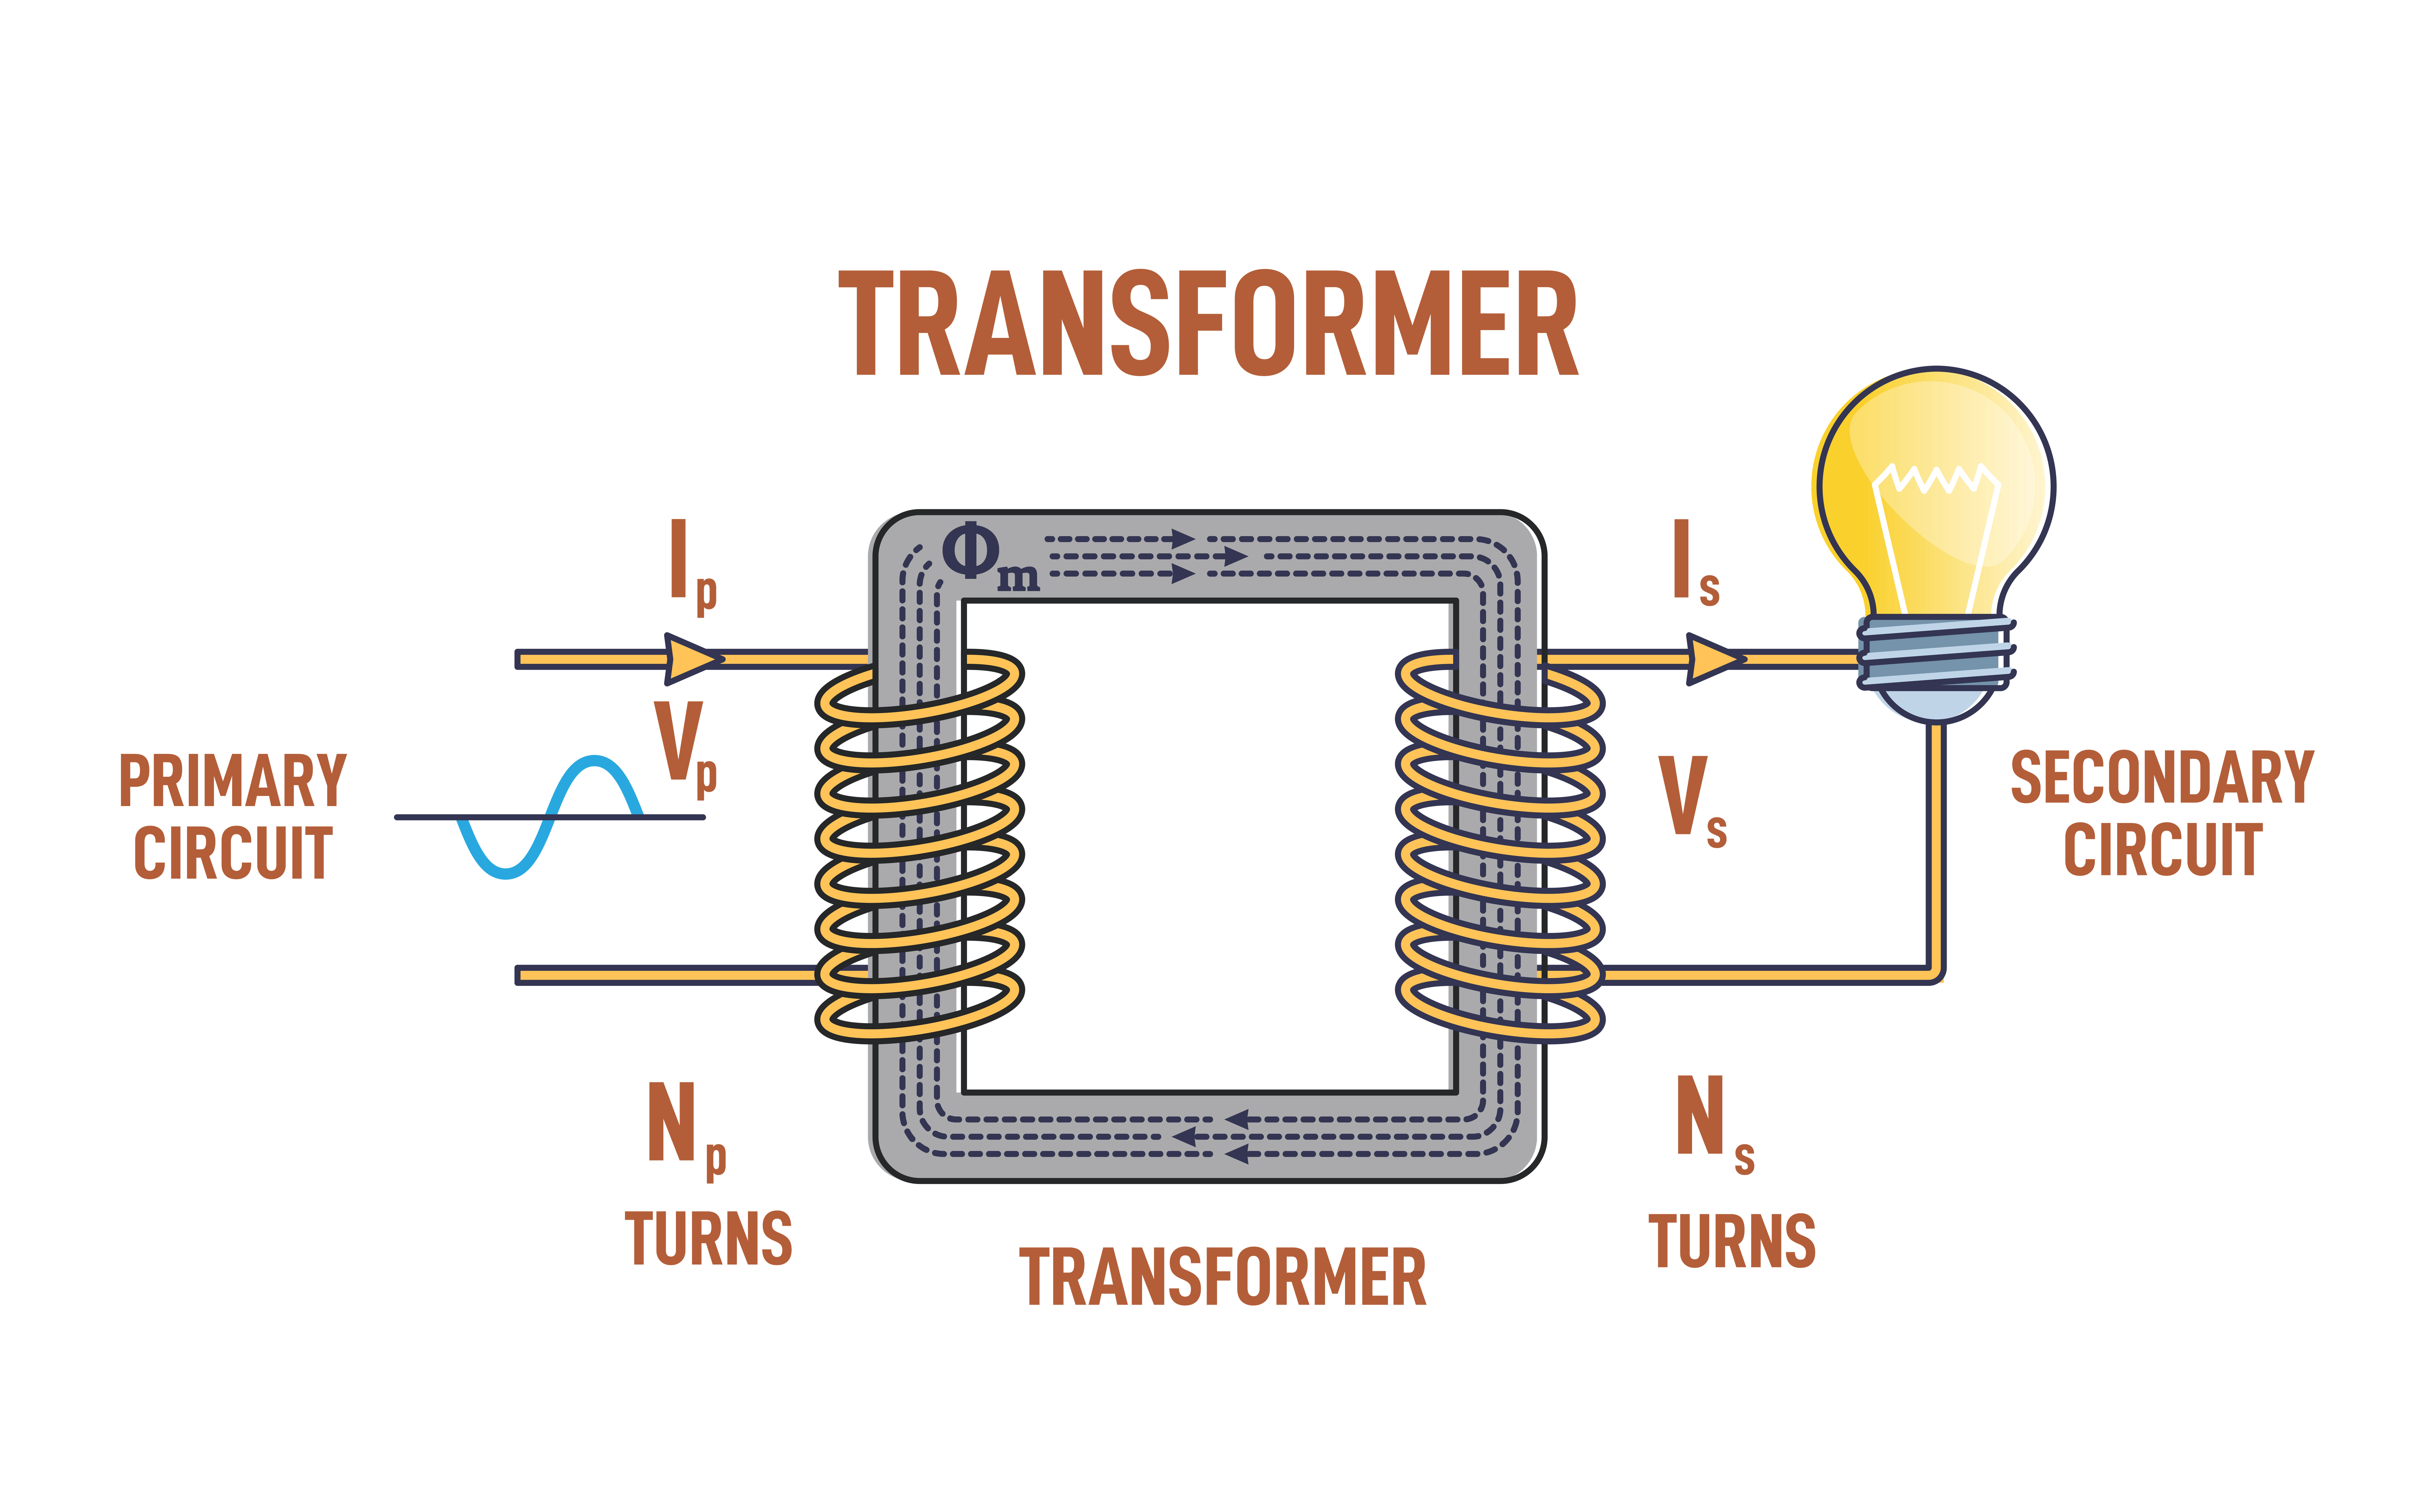 Transformer diagram